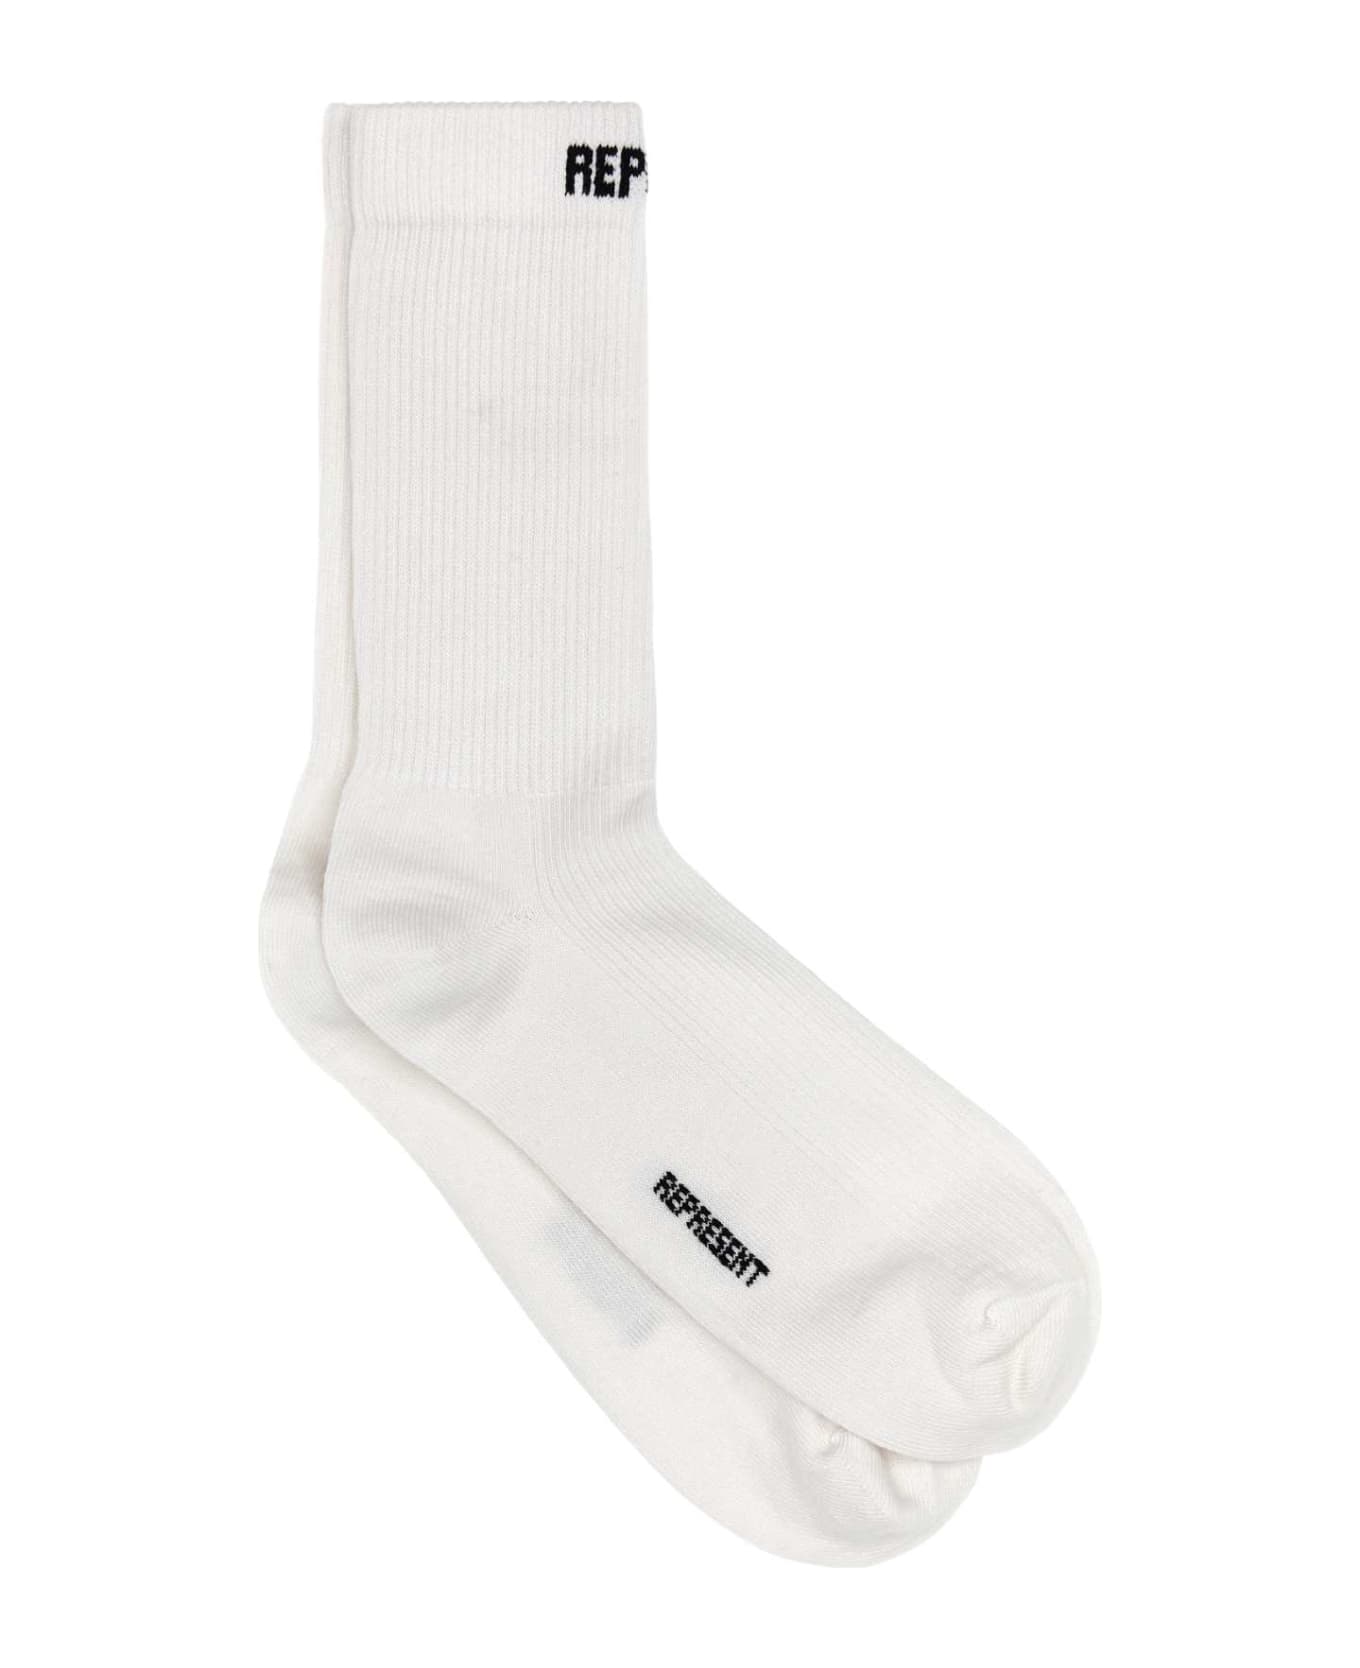 REPRESENT White Cotton And Acrylic Socks - 01